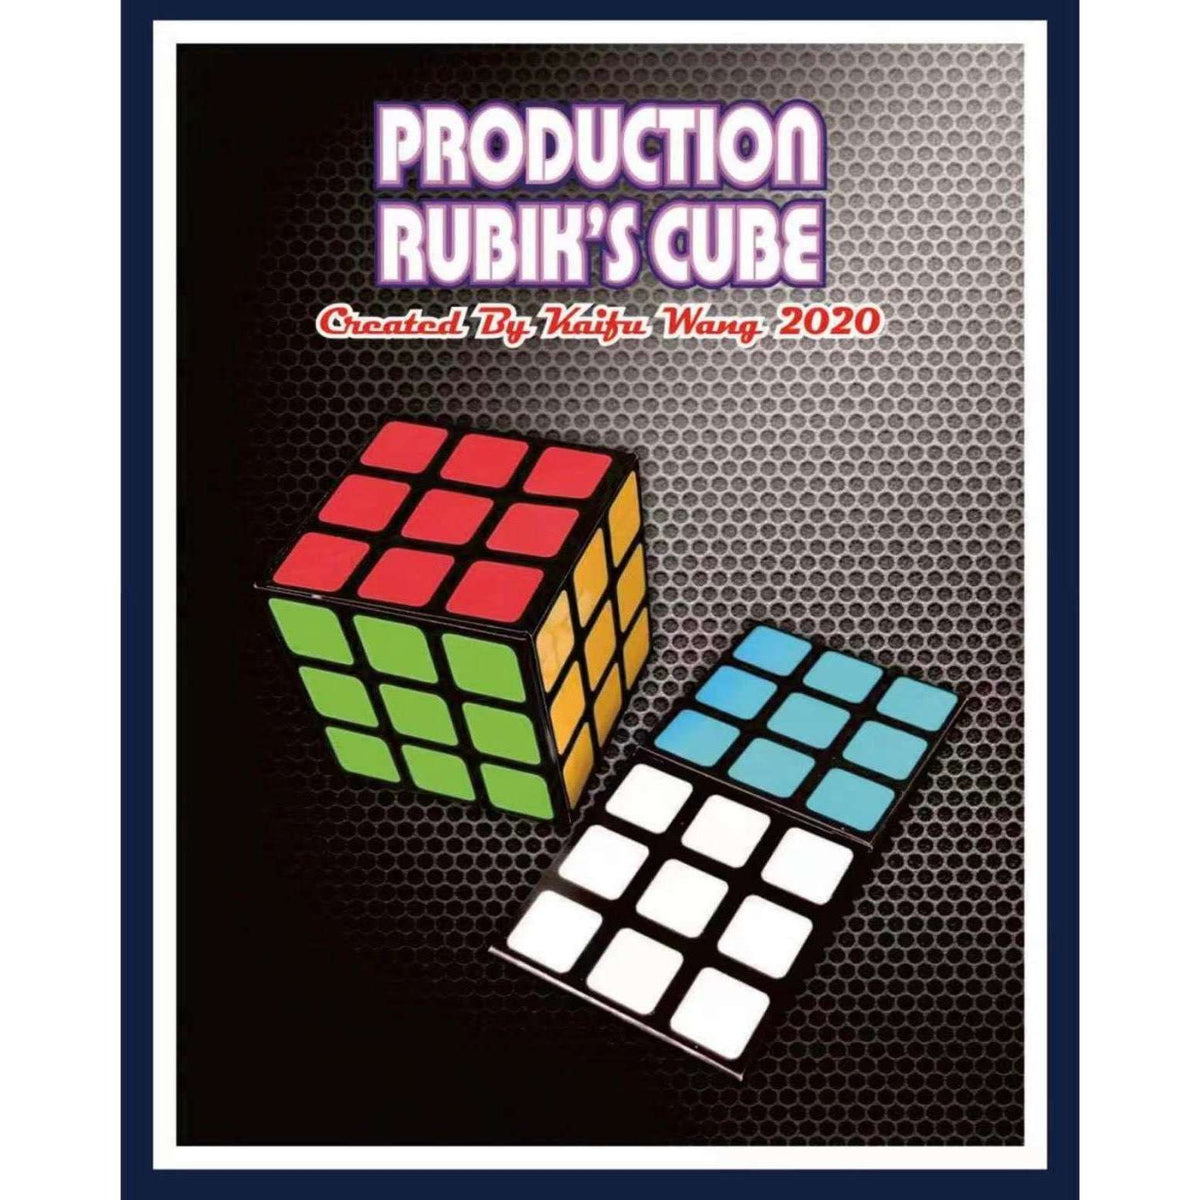 Production Cube by Kaifu Wang